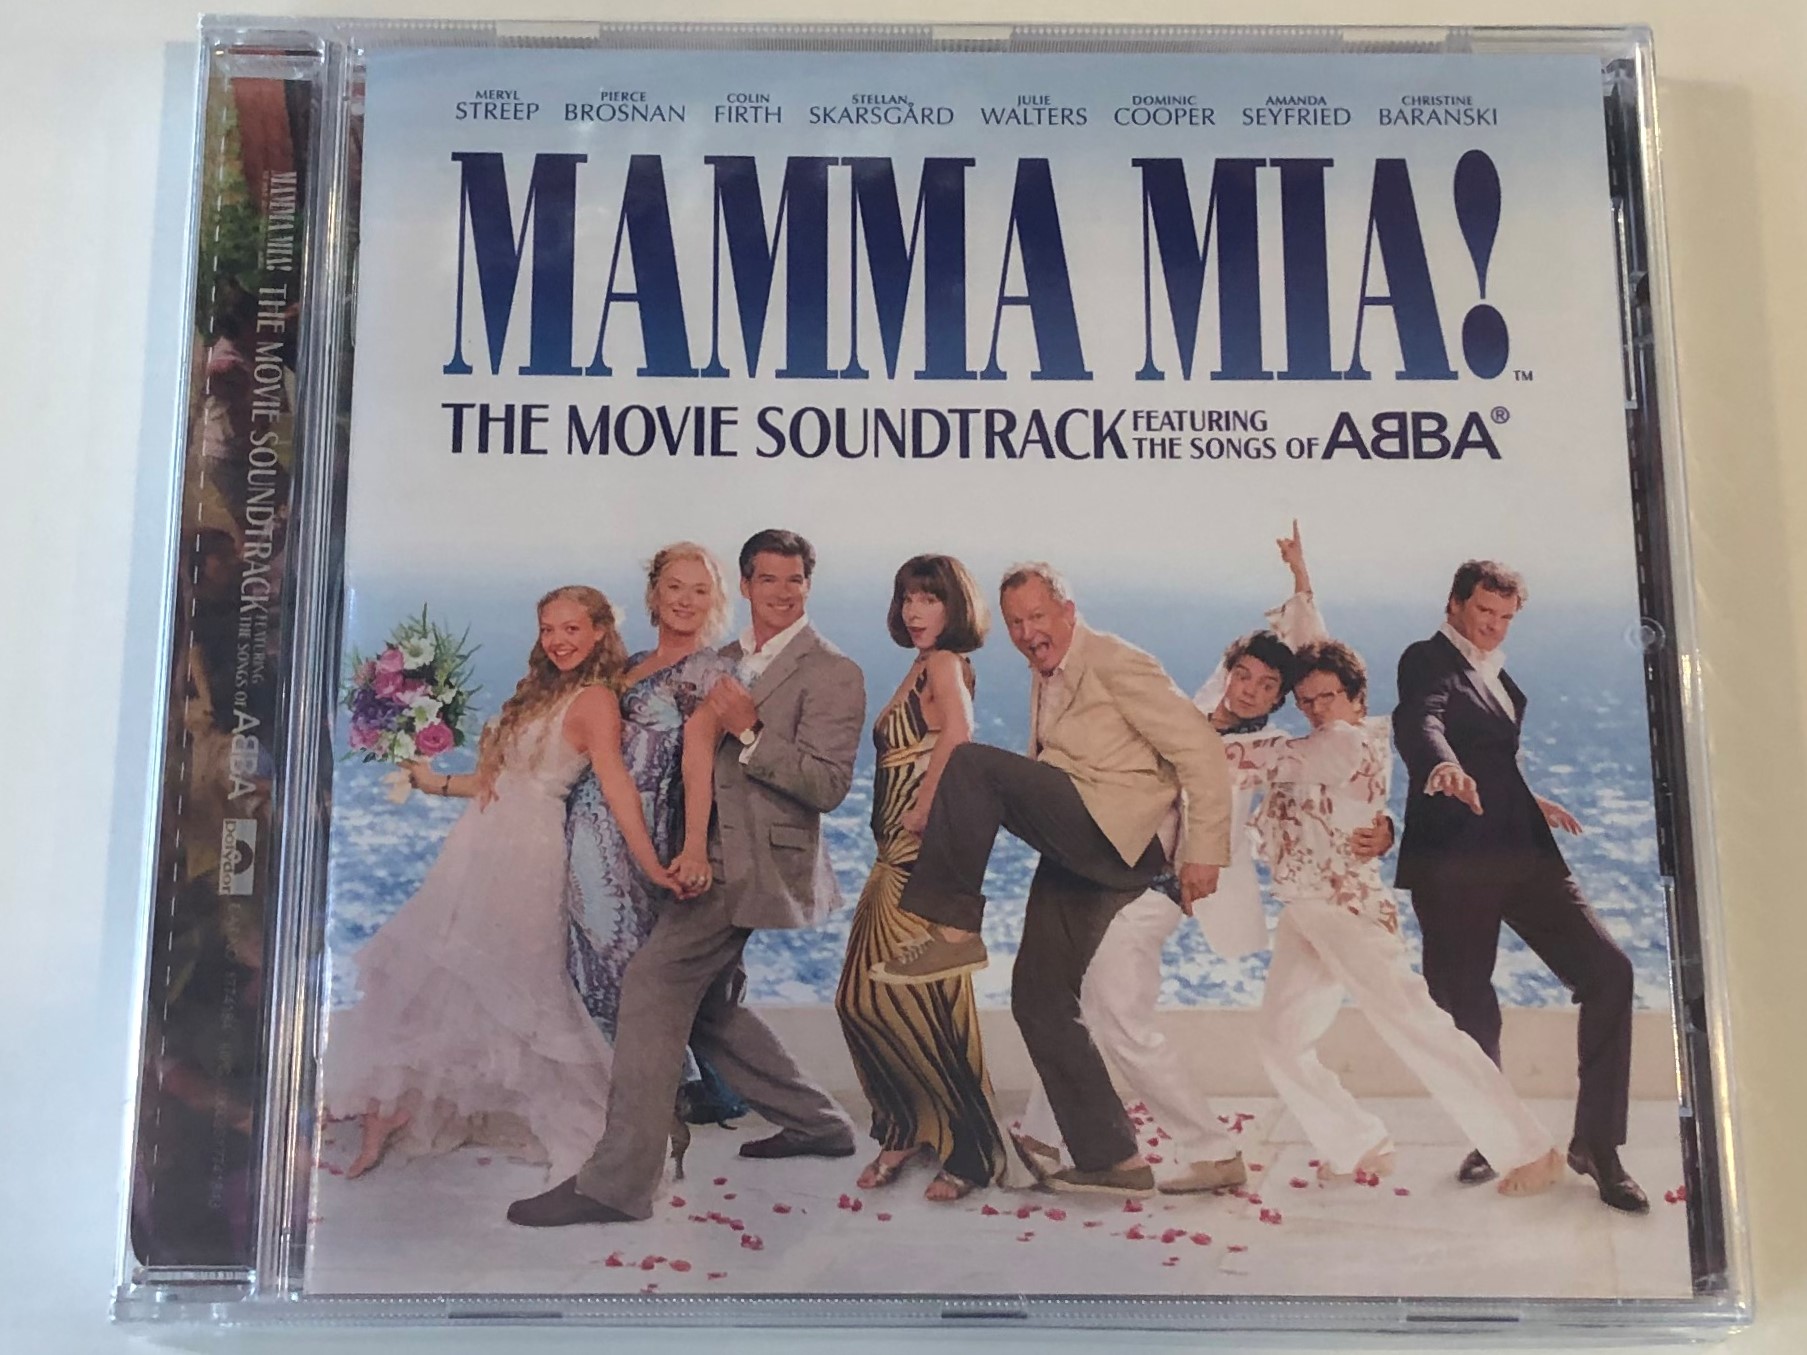 mamma-mia-the-movie-soundtrack-featuring-the-songs-of-abba-meryl-streep-pierce-brosnan-colin-firth-stellan-skarsgard-julie-walters-dominic-cooper-amanda-seyfried-christine-baranski-pol-1-.jpg